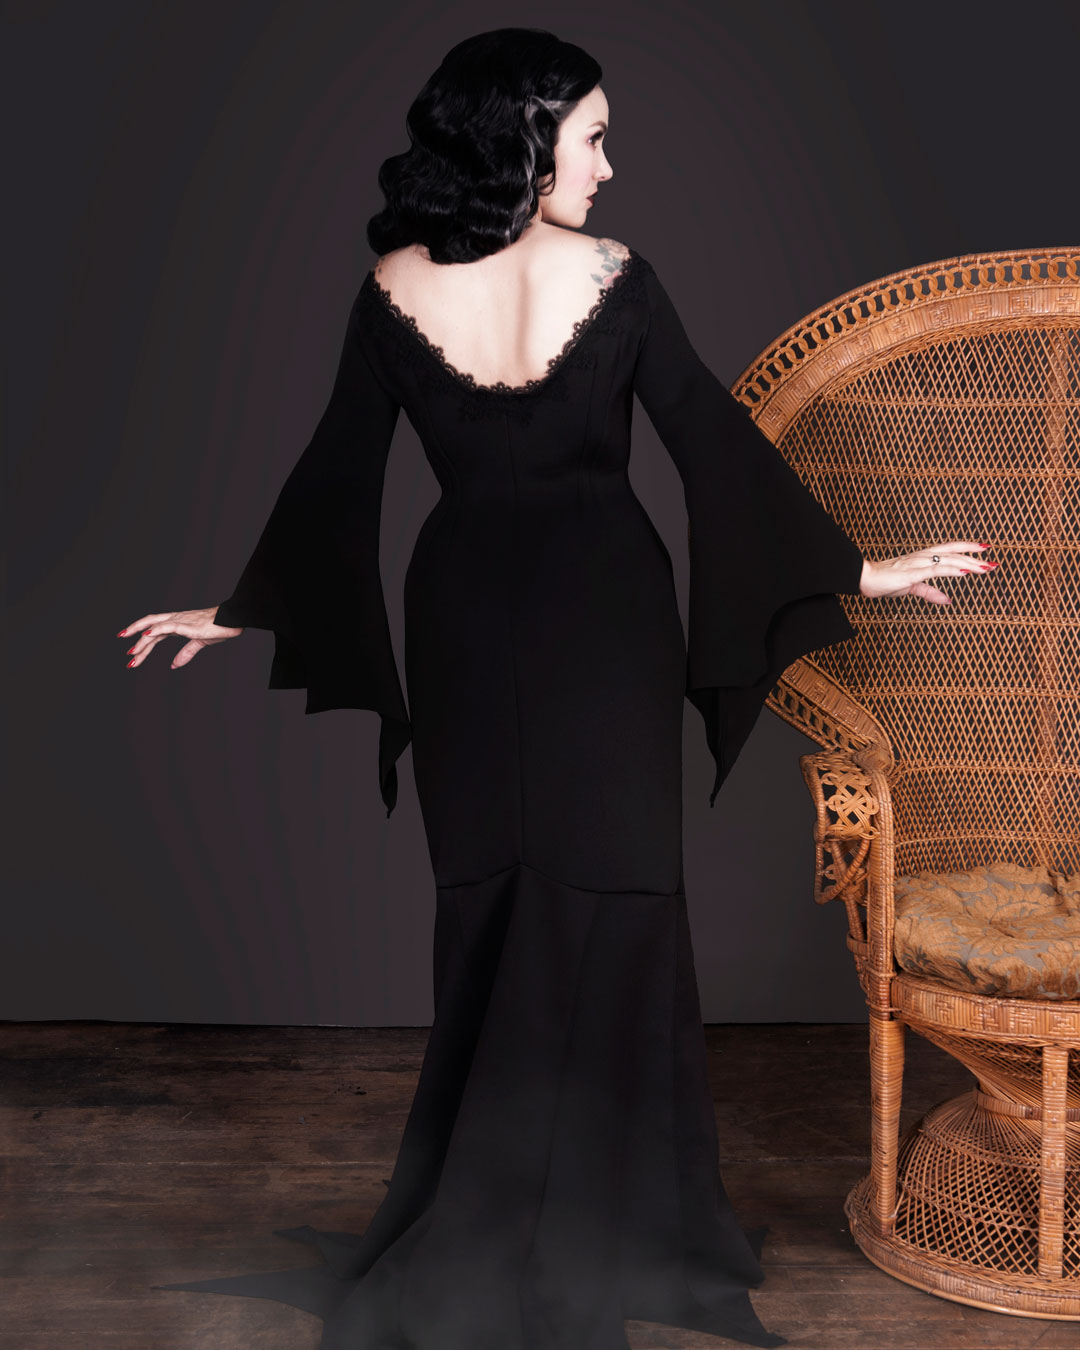 Morticia Addams inspired dress